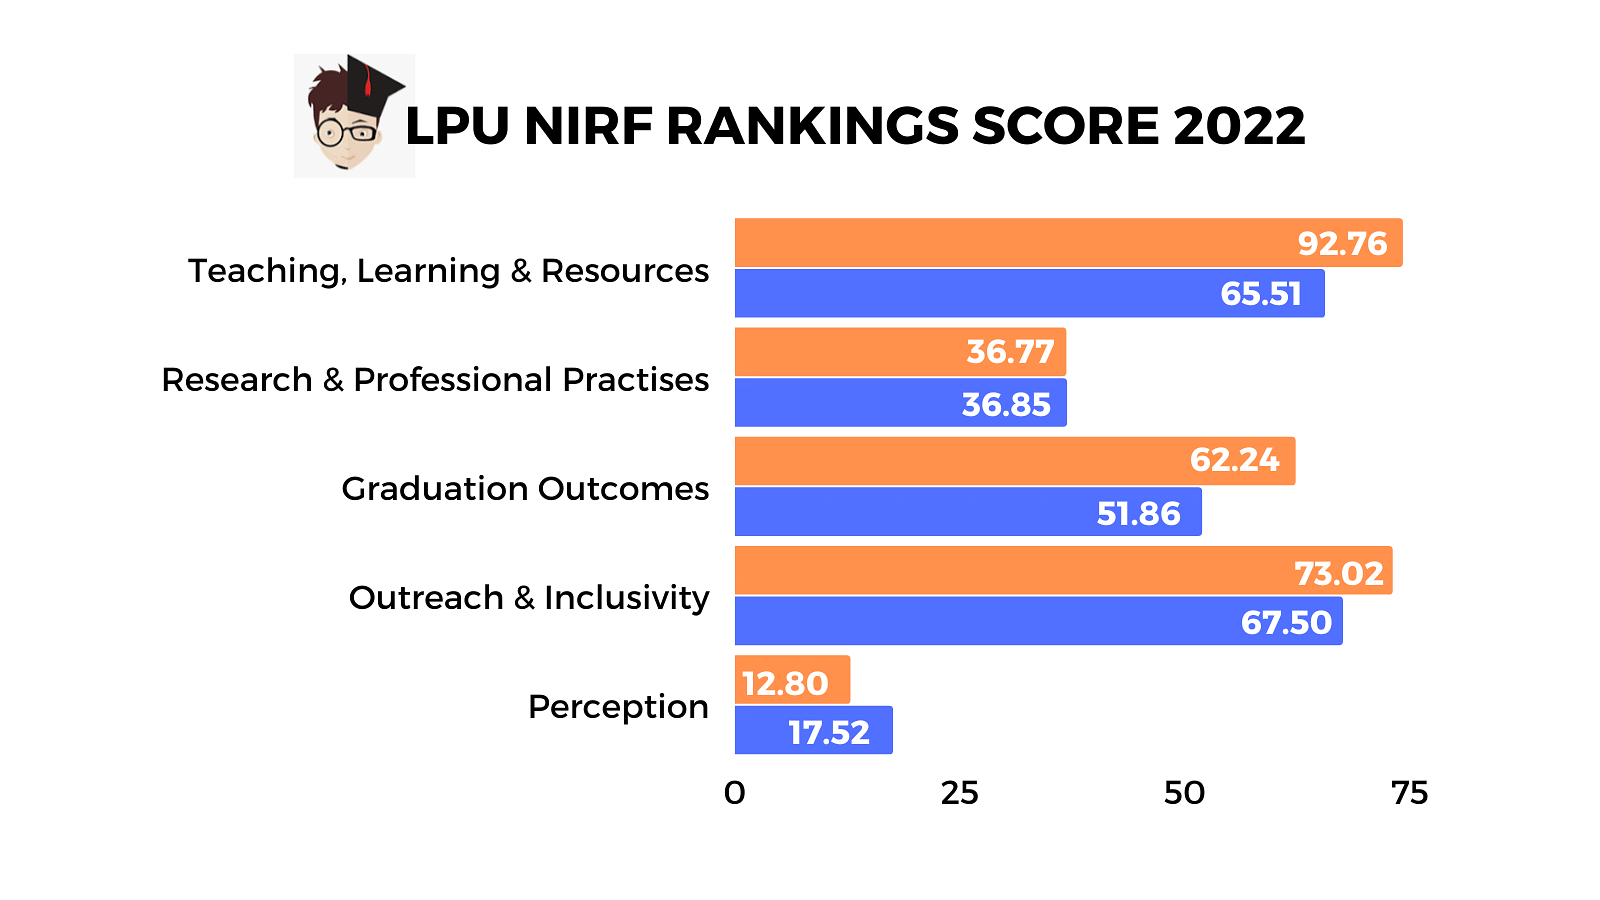 LPU NIRF Ranking 2022 Scores